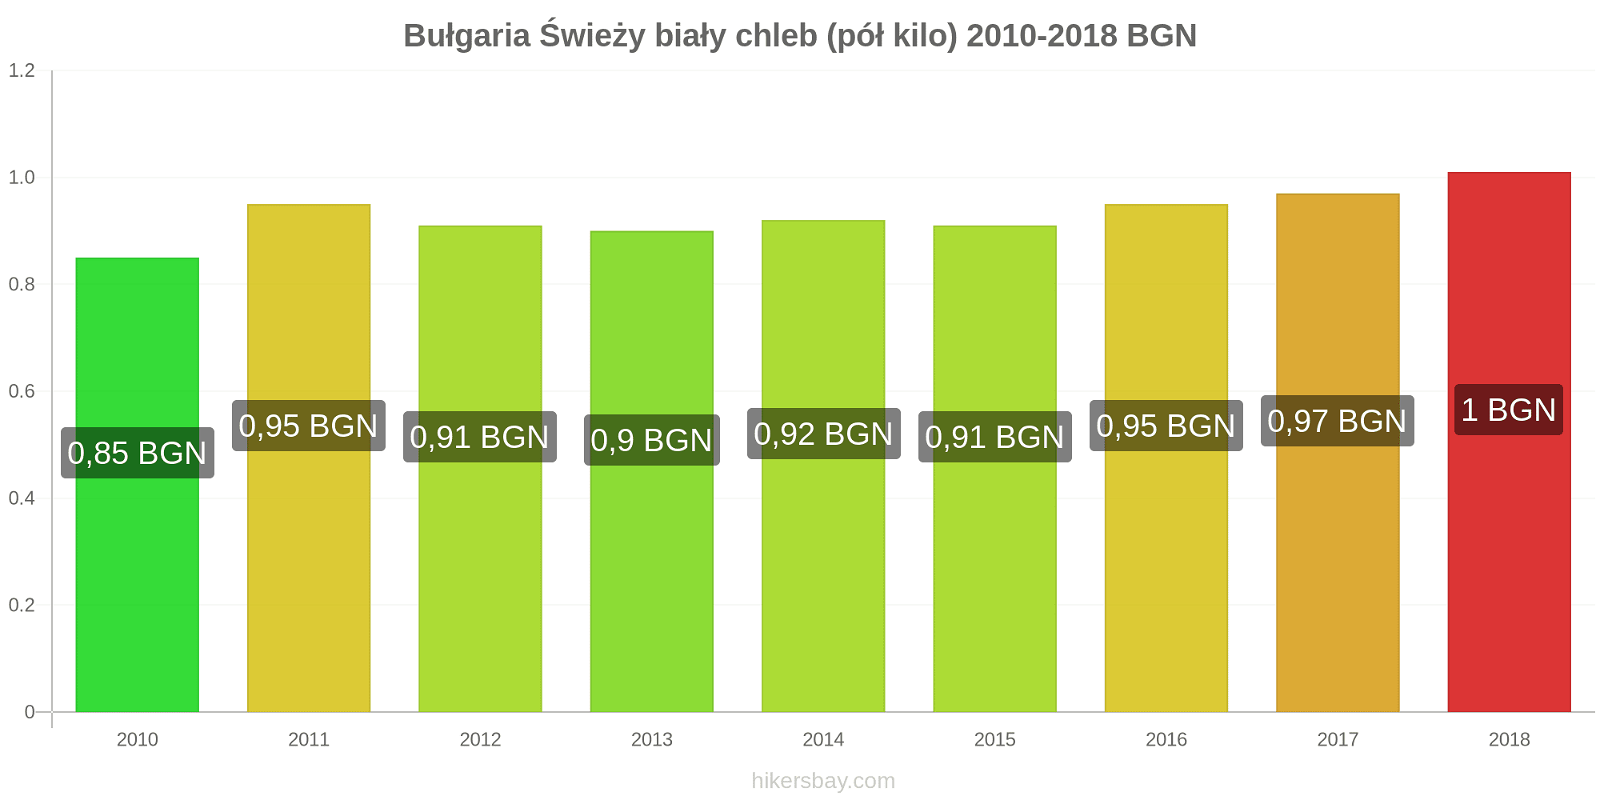 Bułgaria zmiany cen Chleb pół kilo hikersbay.com